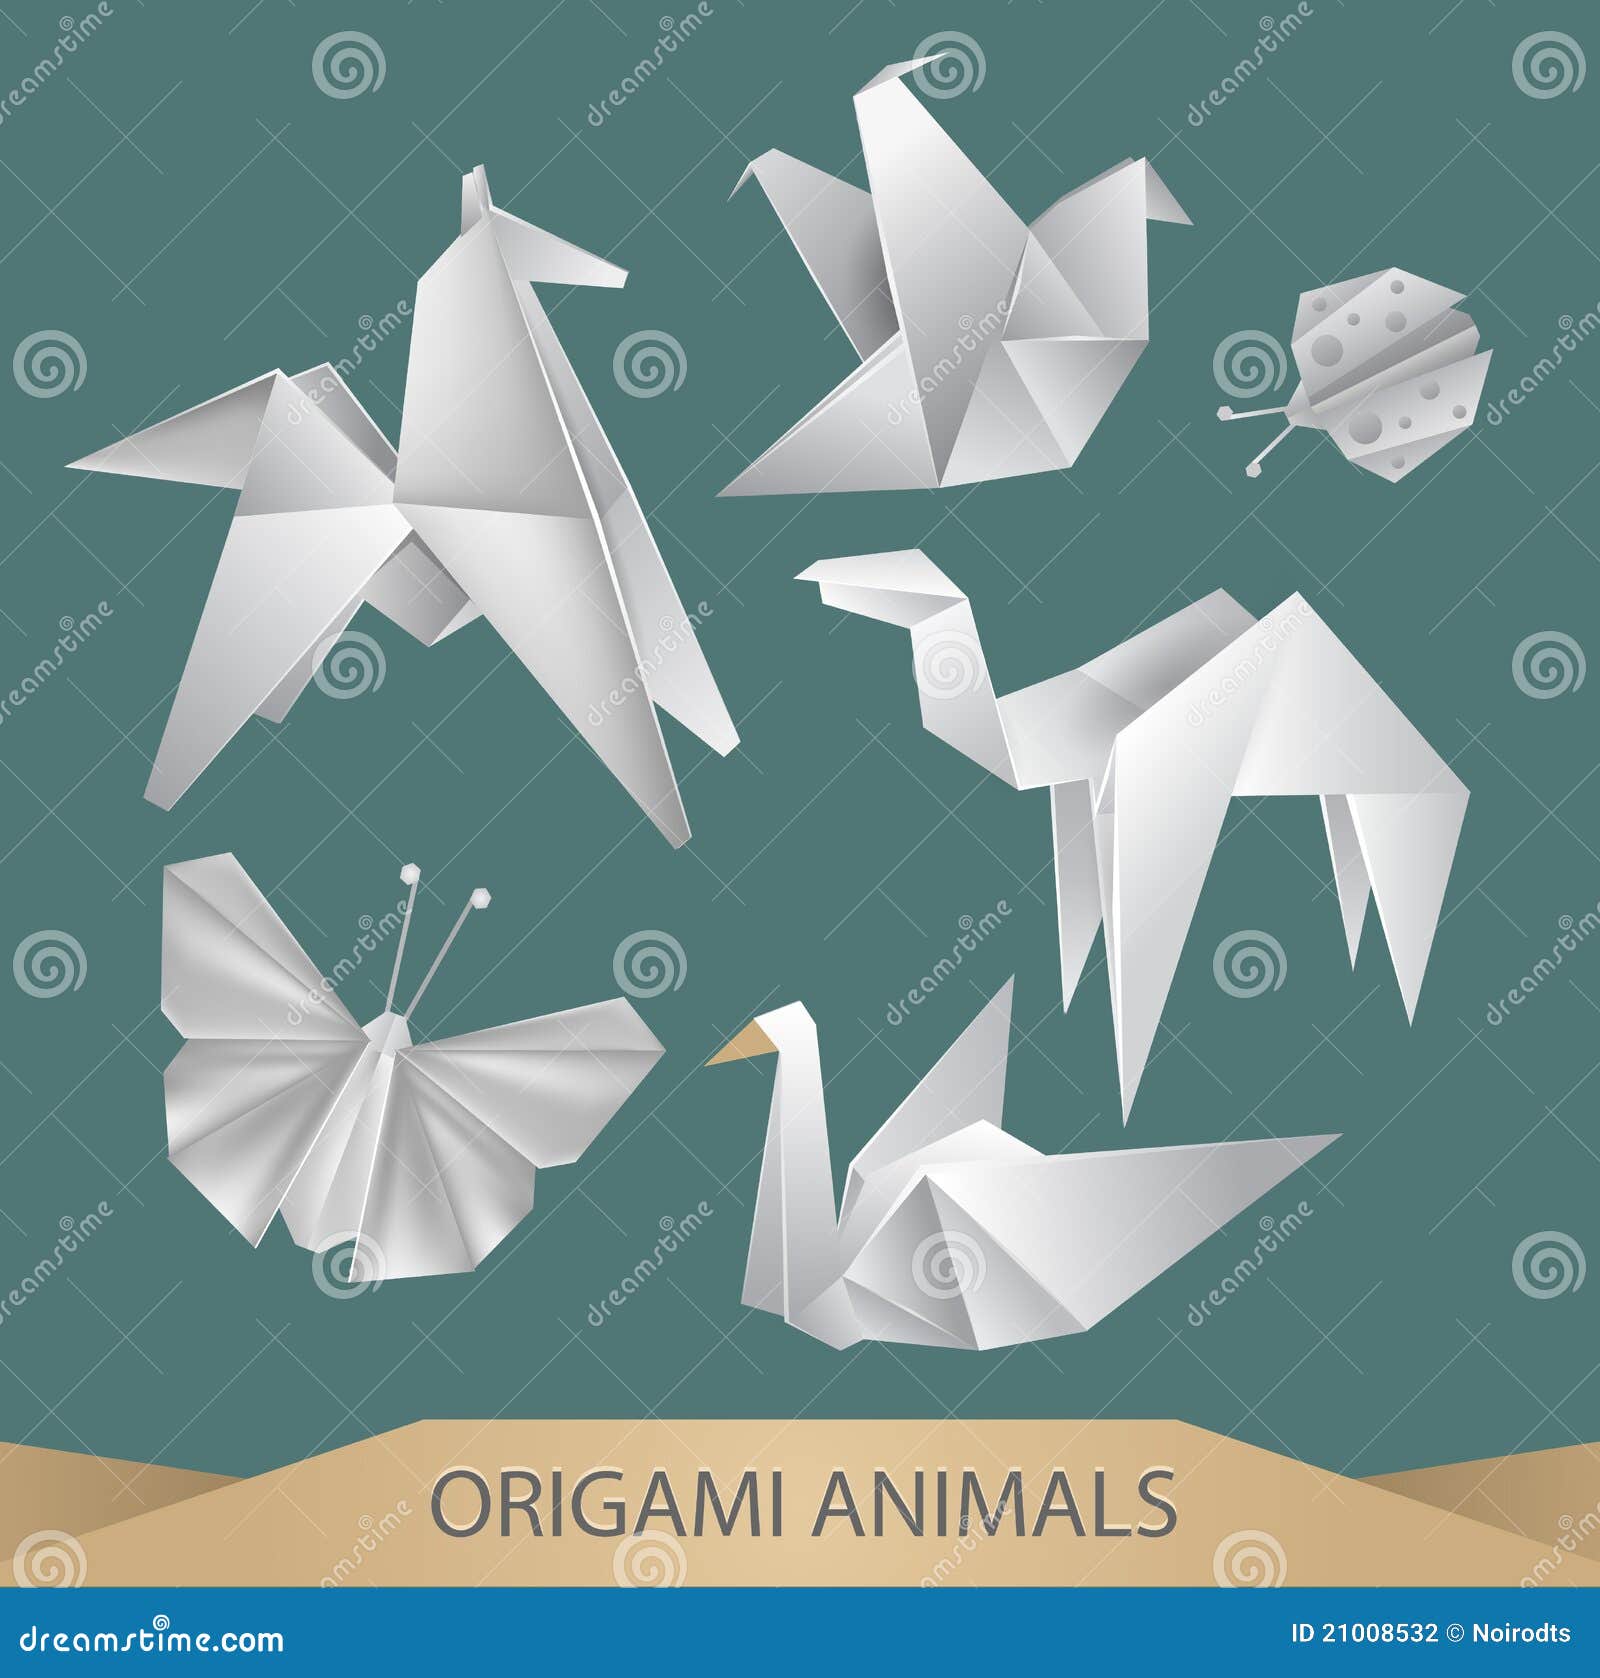 Origami animals stock vector. Illustration of fashioned - 21008532